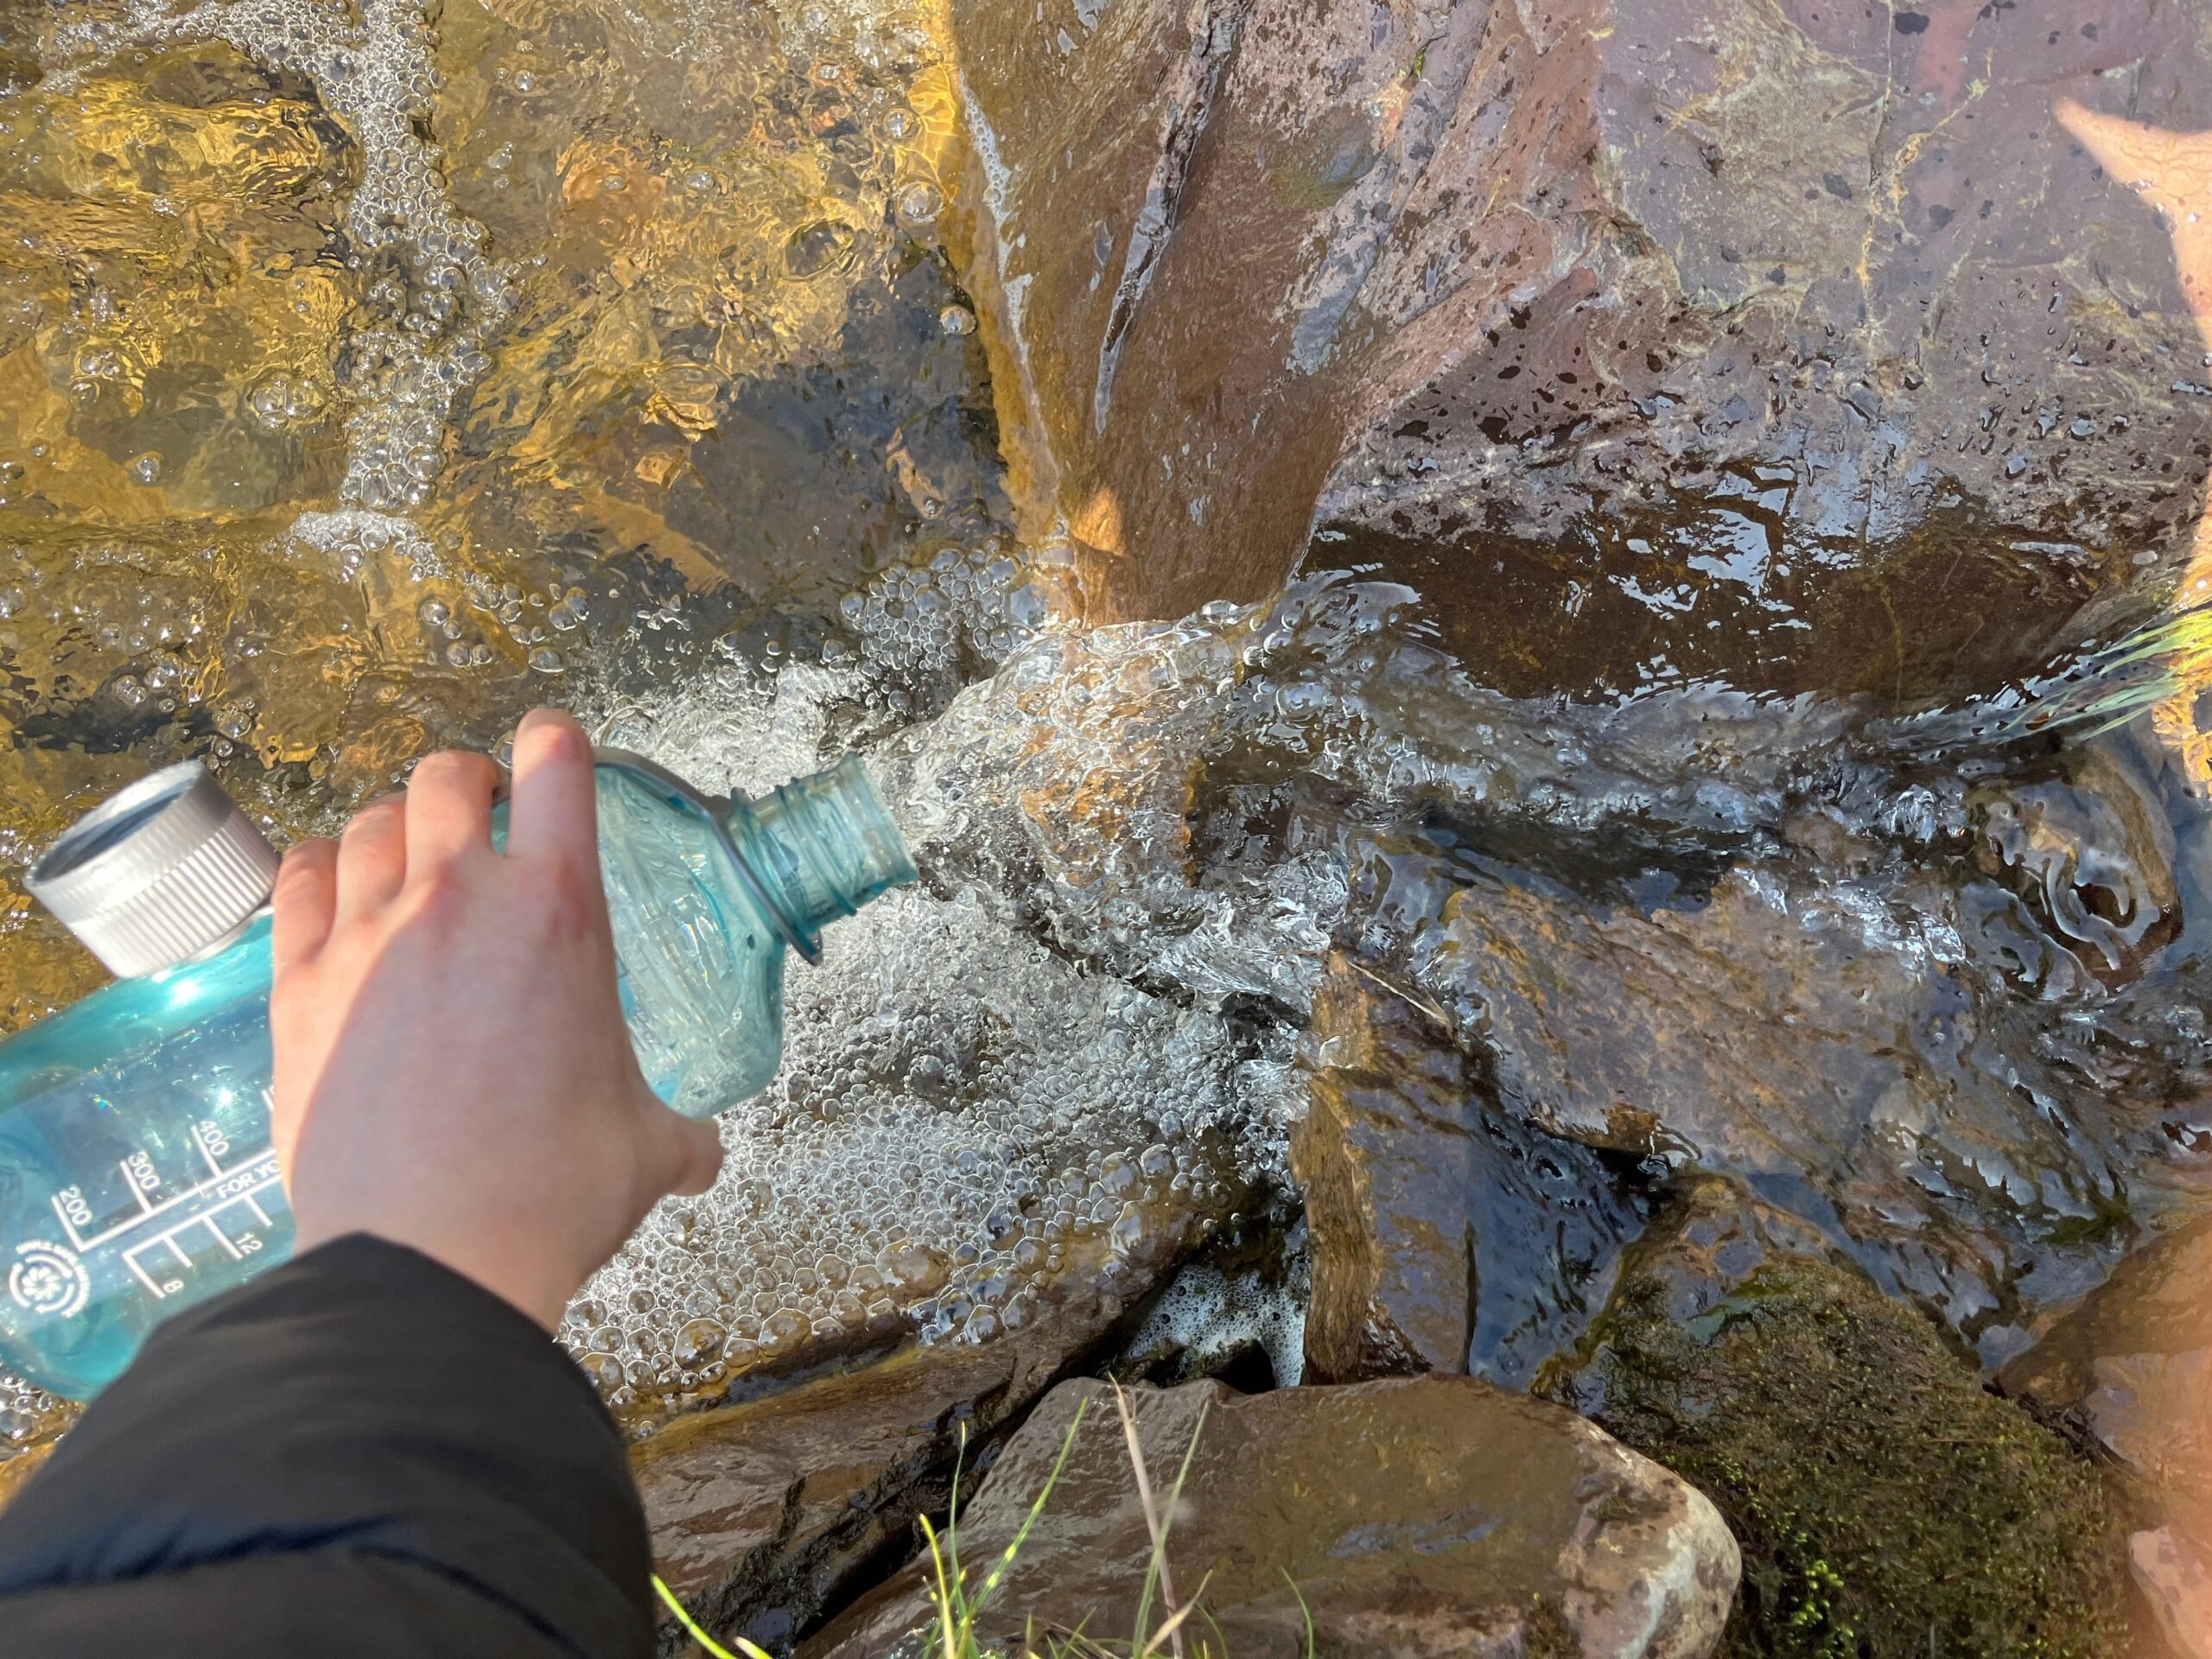 Filling a water bottle in a stream in Iceland